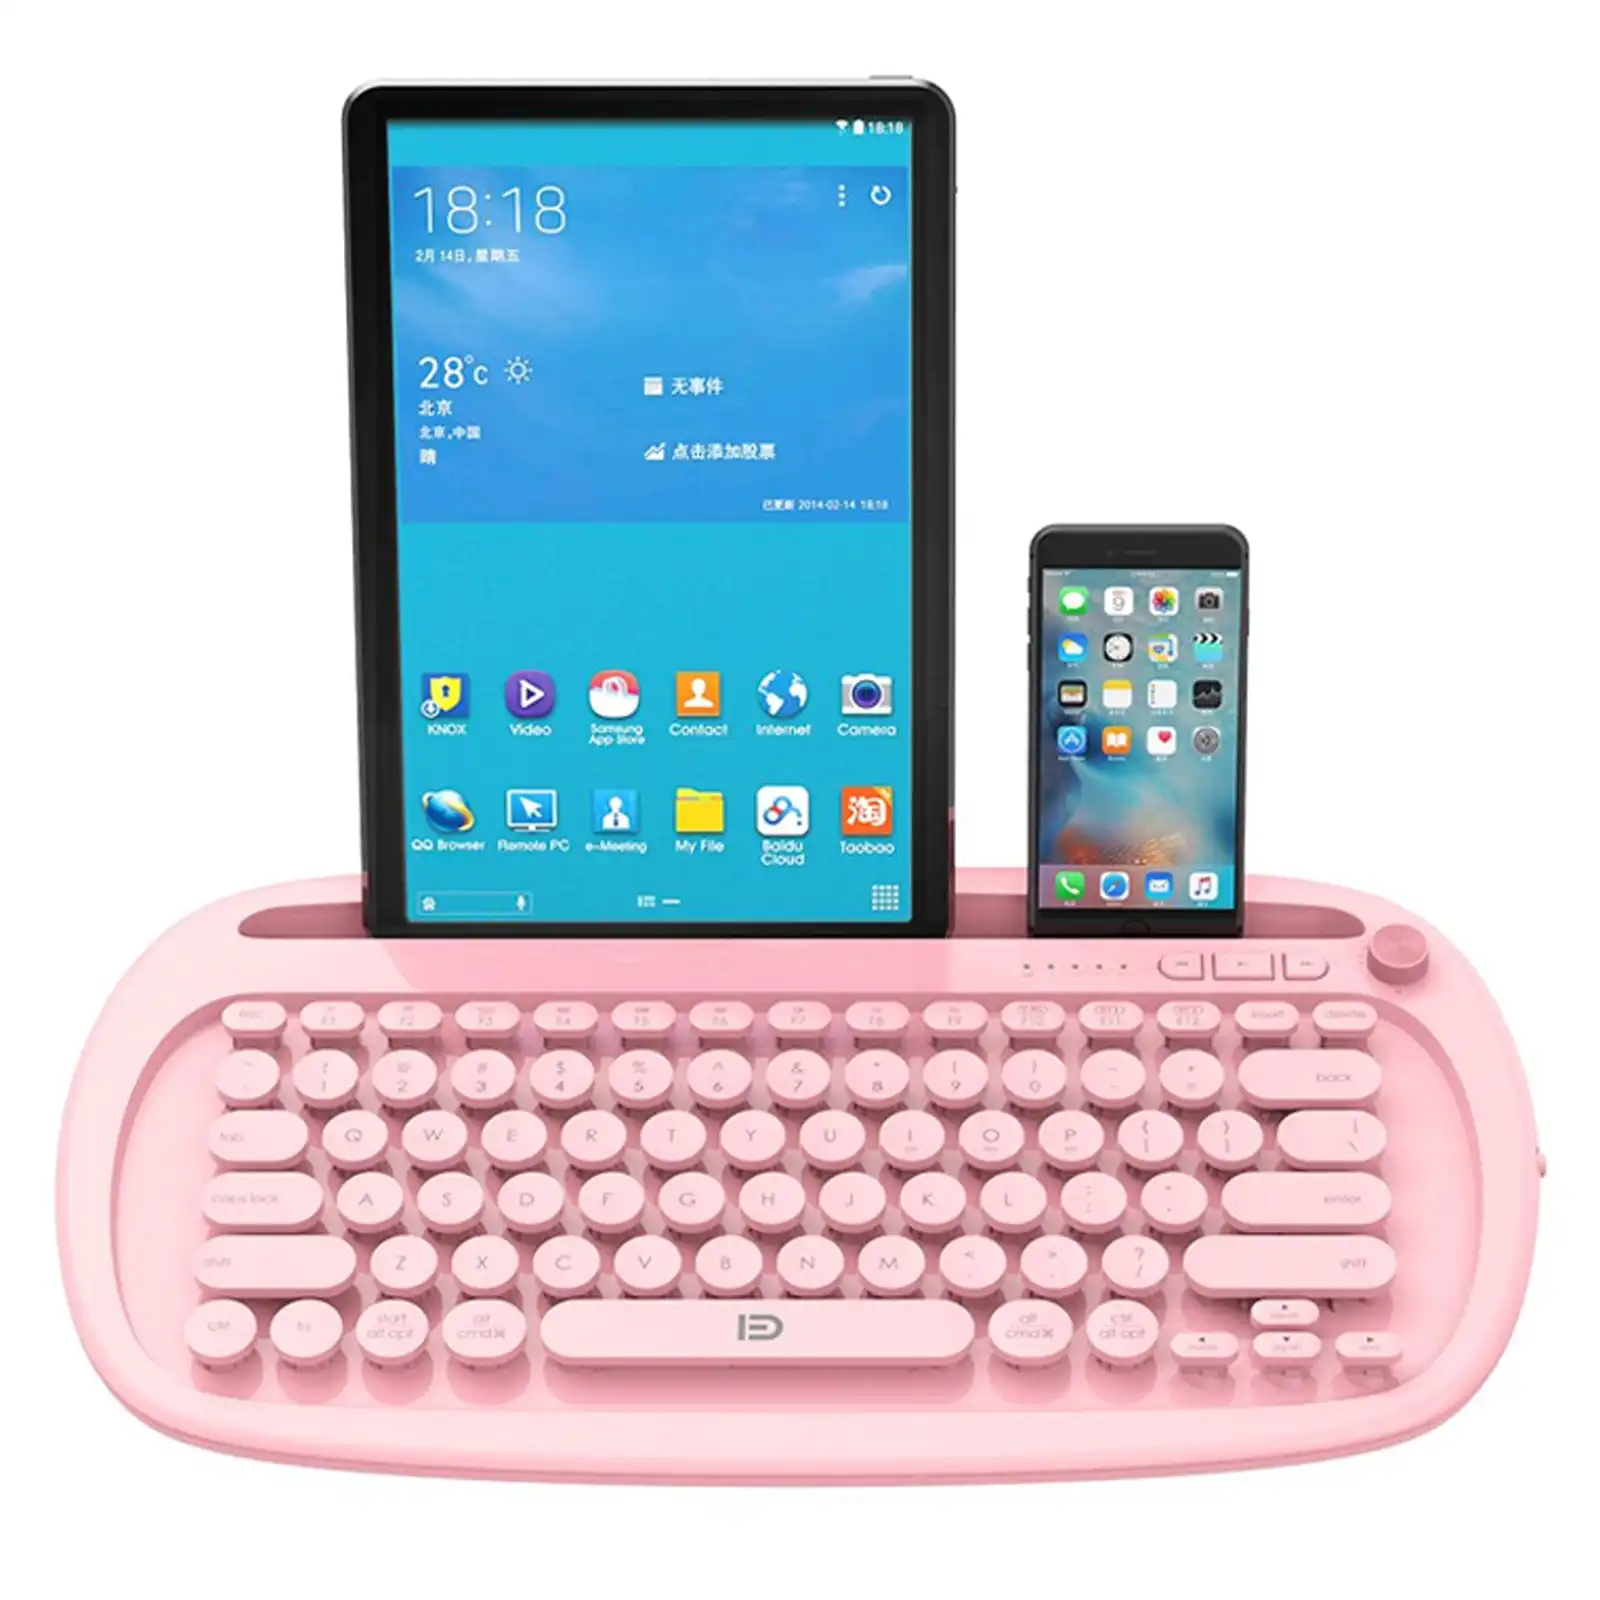 TODO Bluetooth Wireless Keyboard Tablet Holder Mac Windows Android USB 2.4G BT 3.0 5.0 - Pink